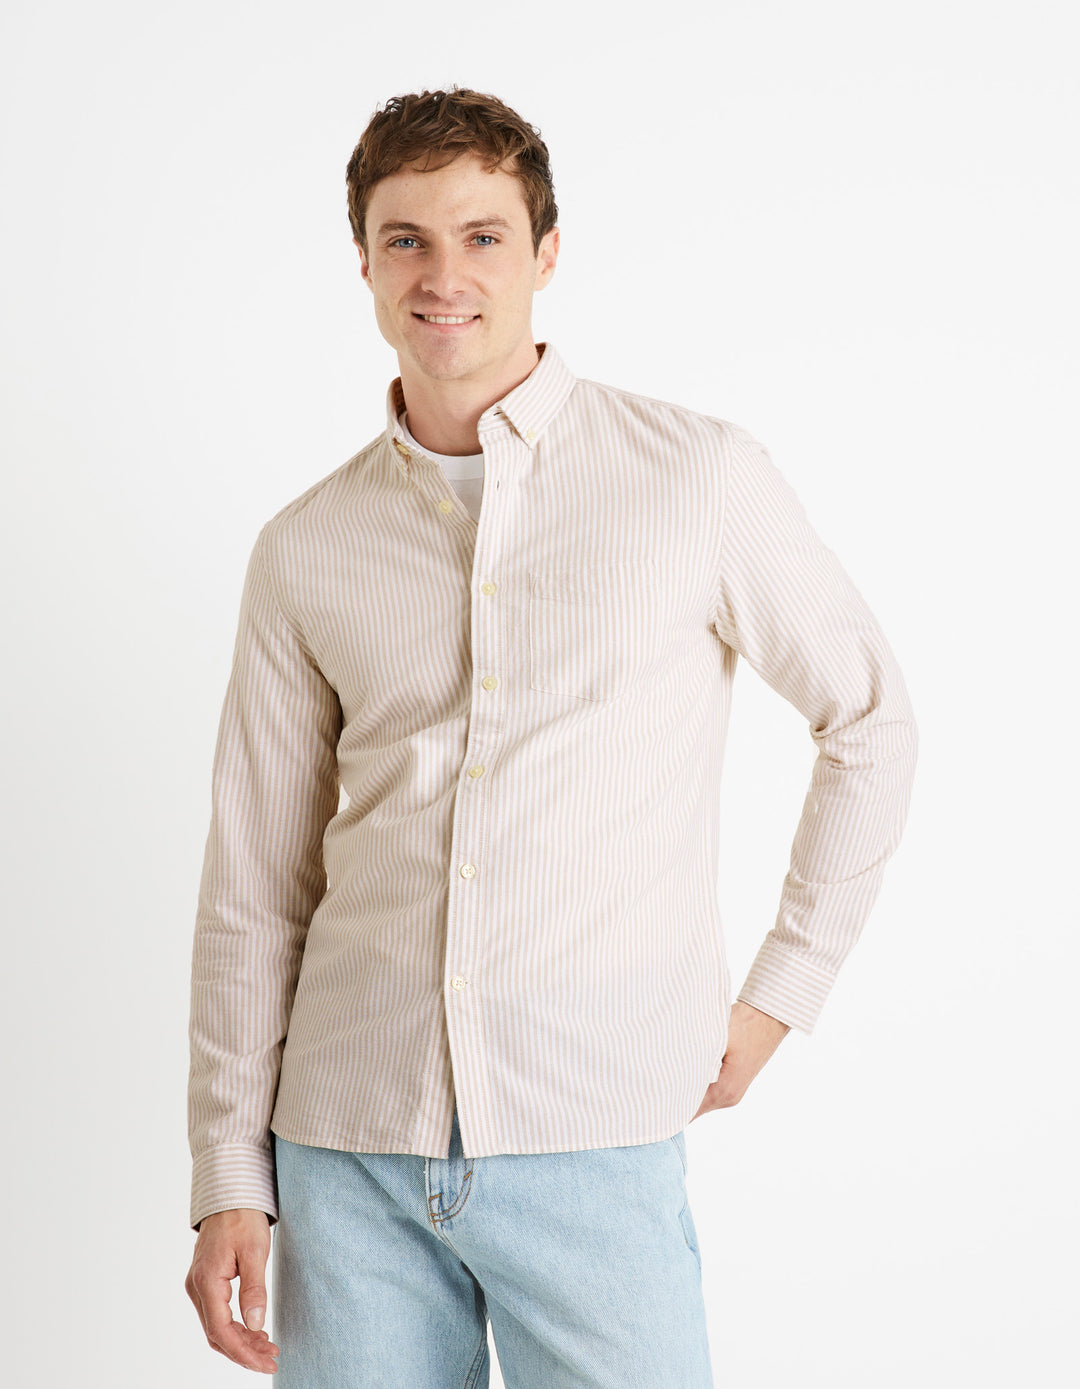 Regular 100% cotton oxford shirt